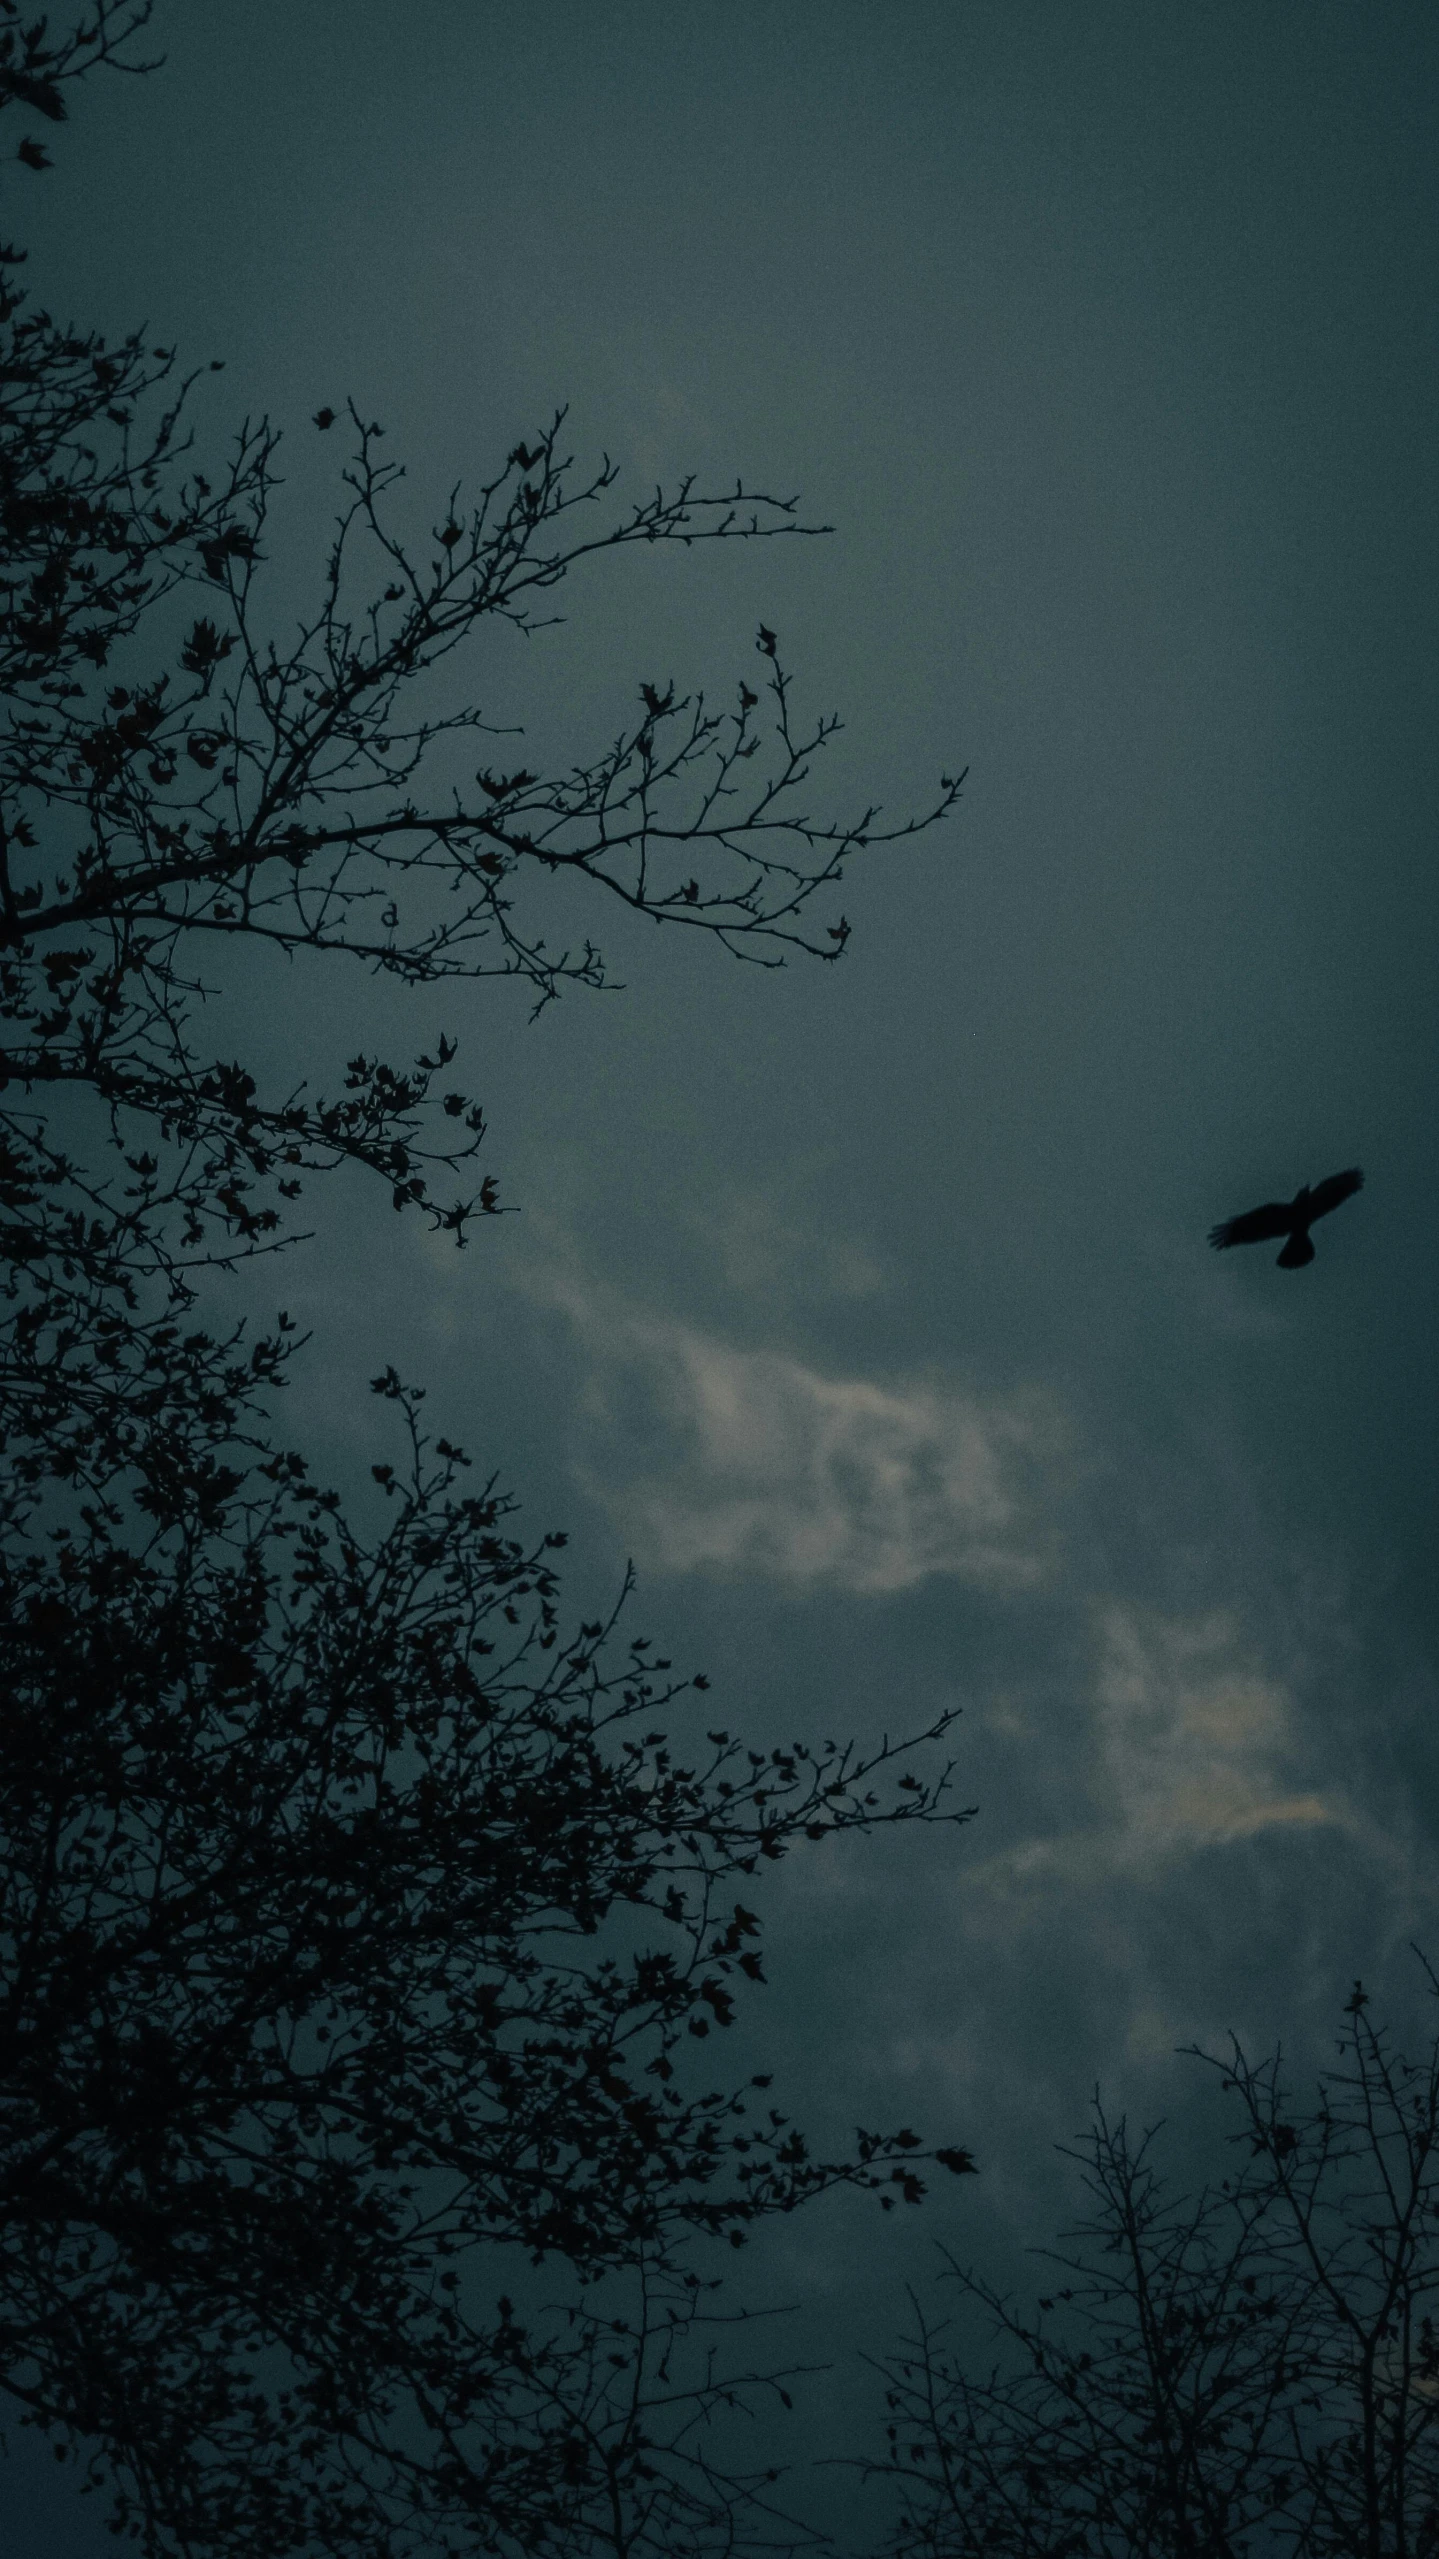 a bird flying on the cloudy sky through the trees